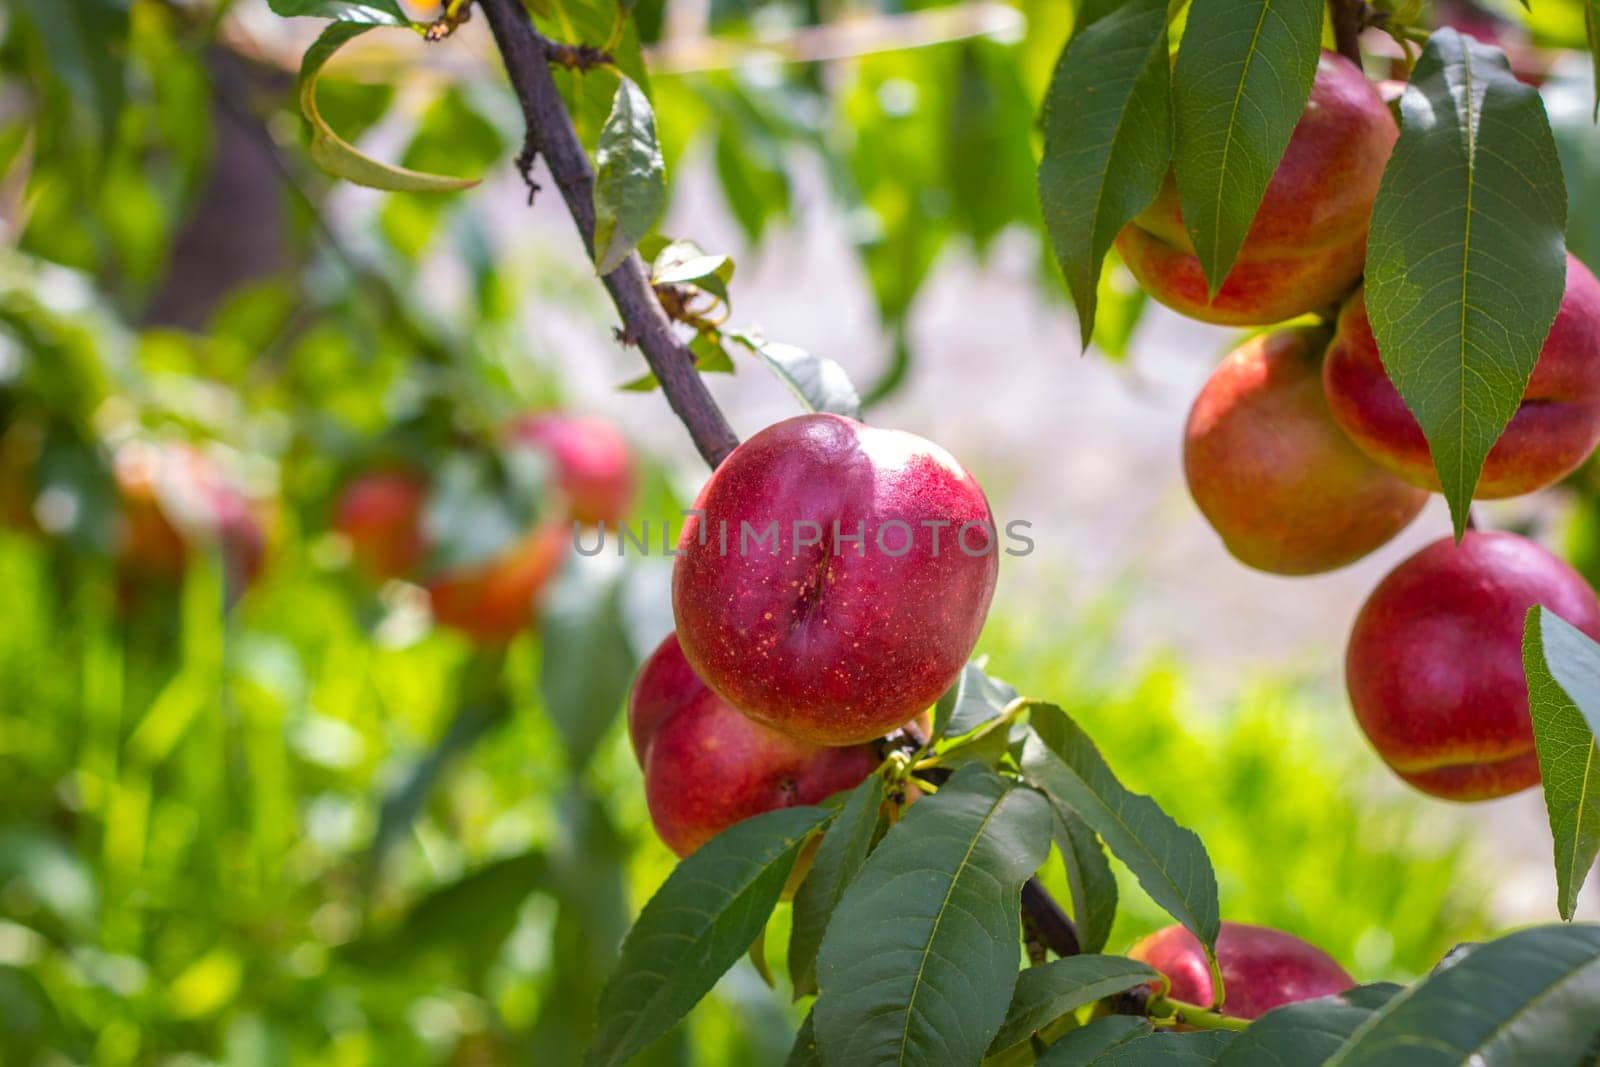 Fesh ripe nectarine peaches growing on branch. Fresh organic natural fruit in sun light blur green background